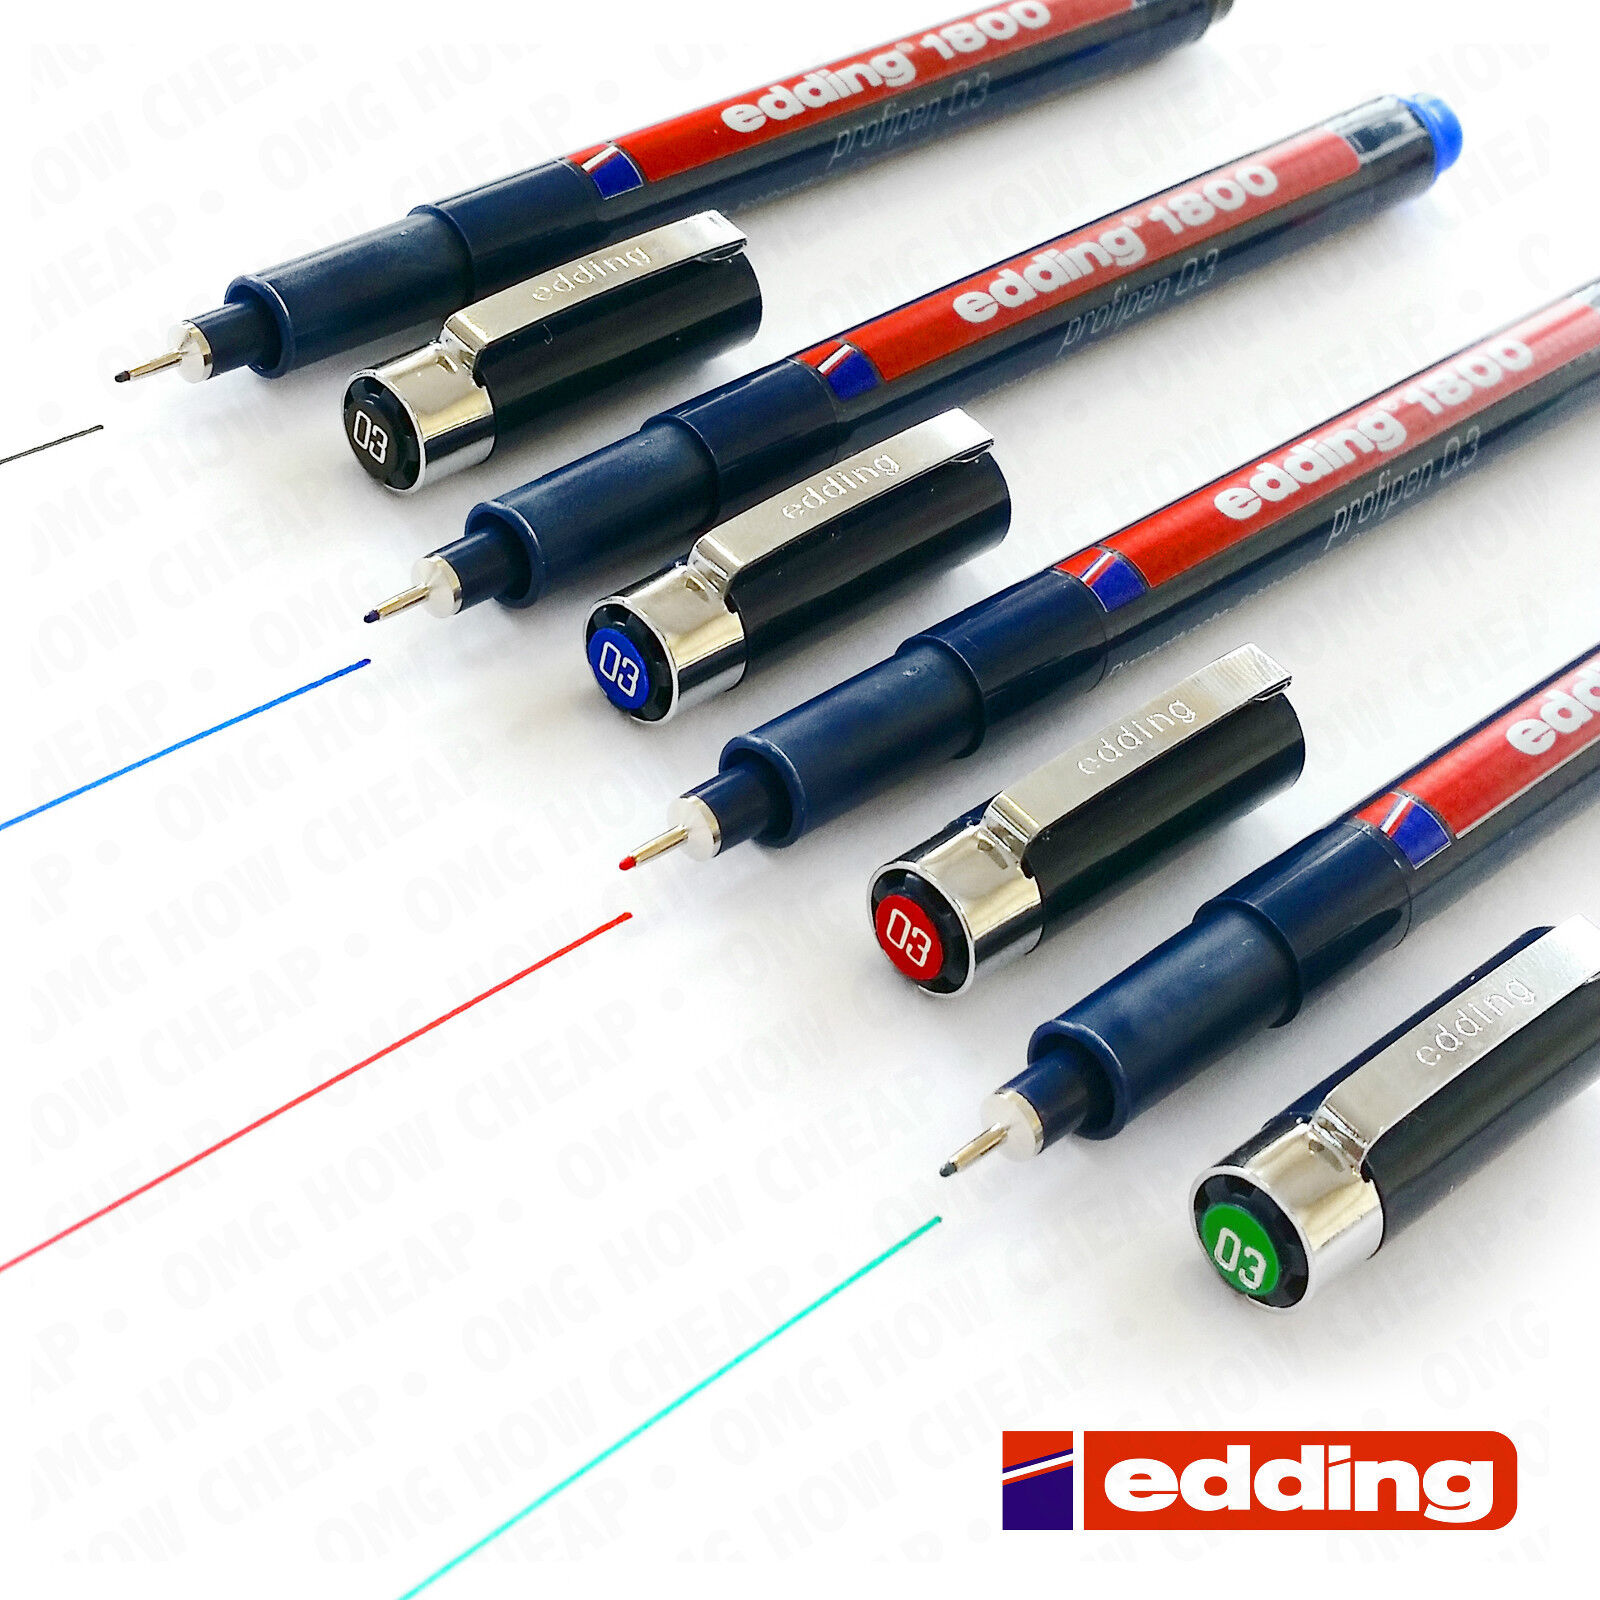 4 x Edding 1800 Drawing Pen Pigment Liner Fineliner 0.3mm Black,Blue,Red,Green